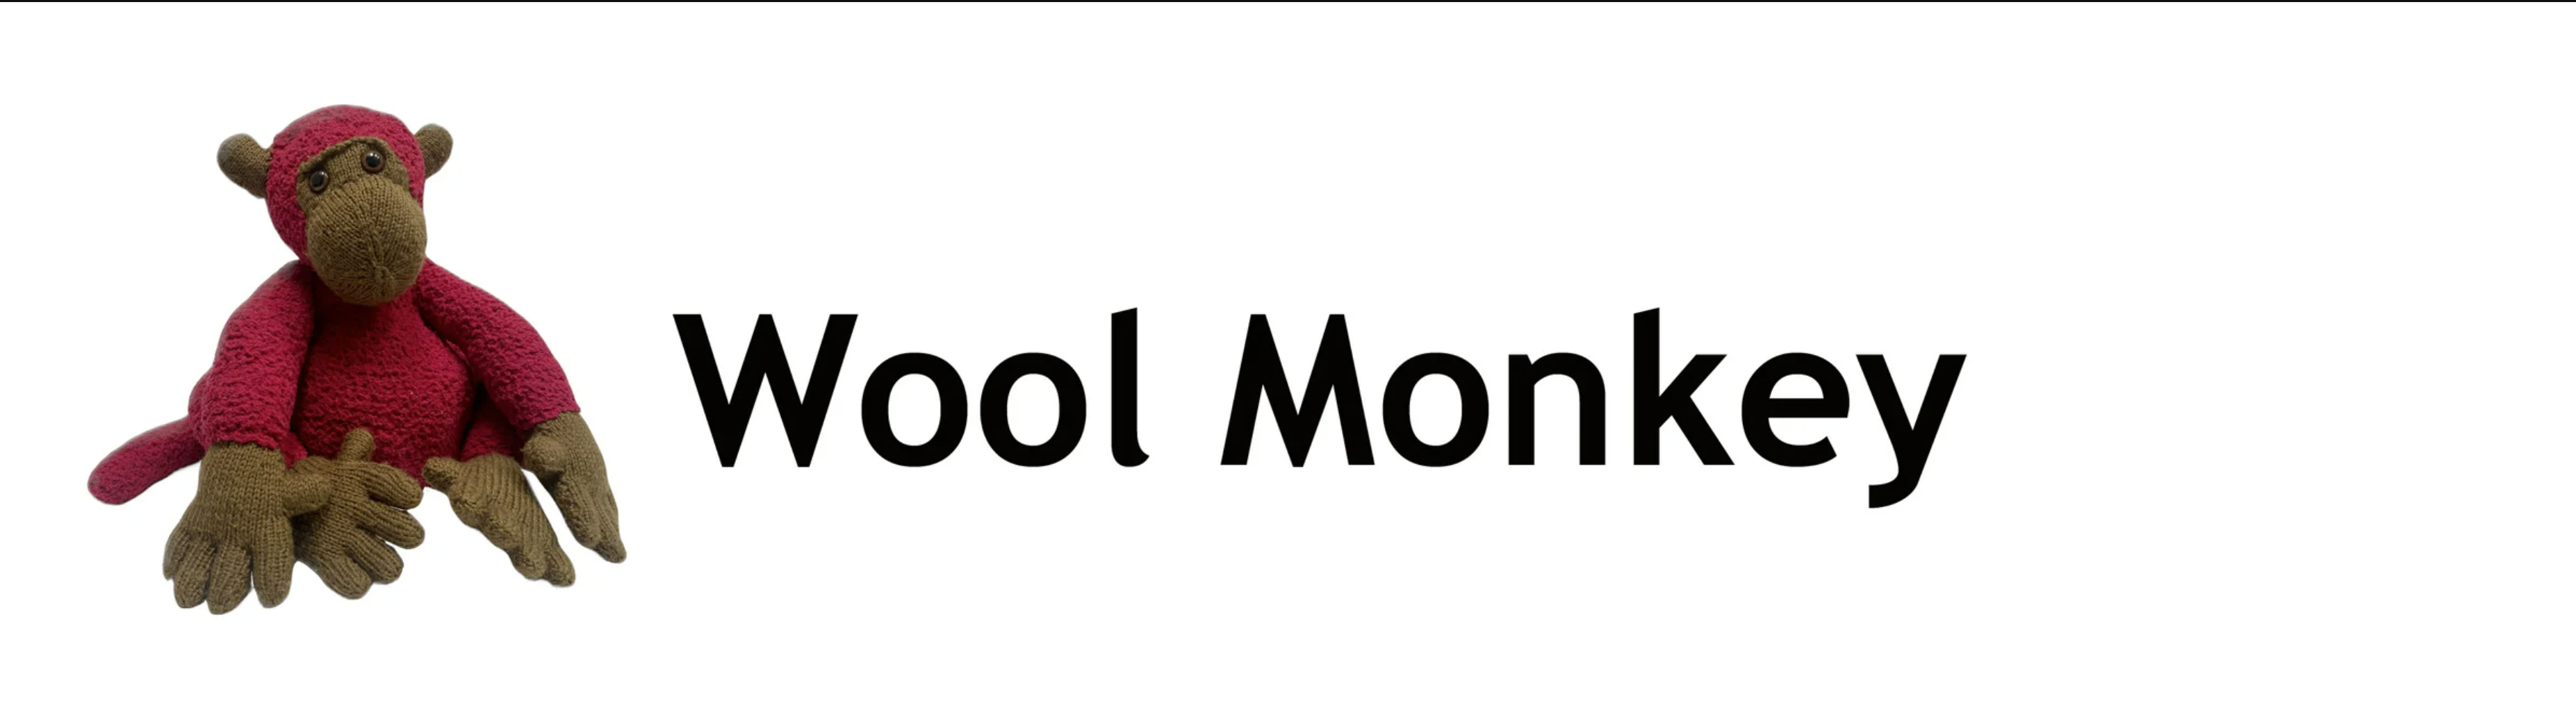 Wool Monkey logo